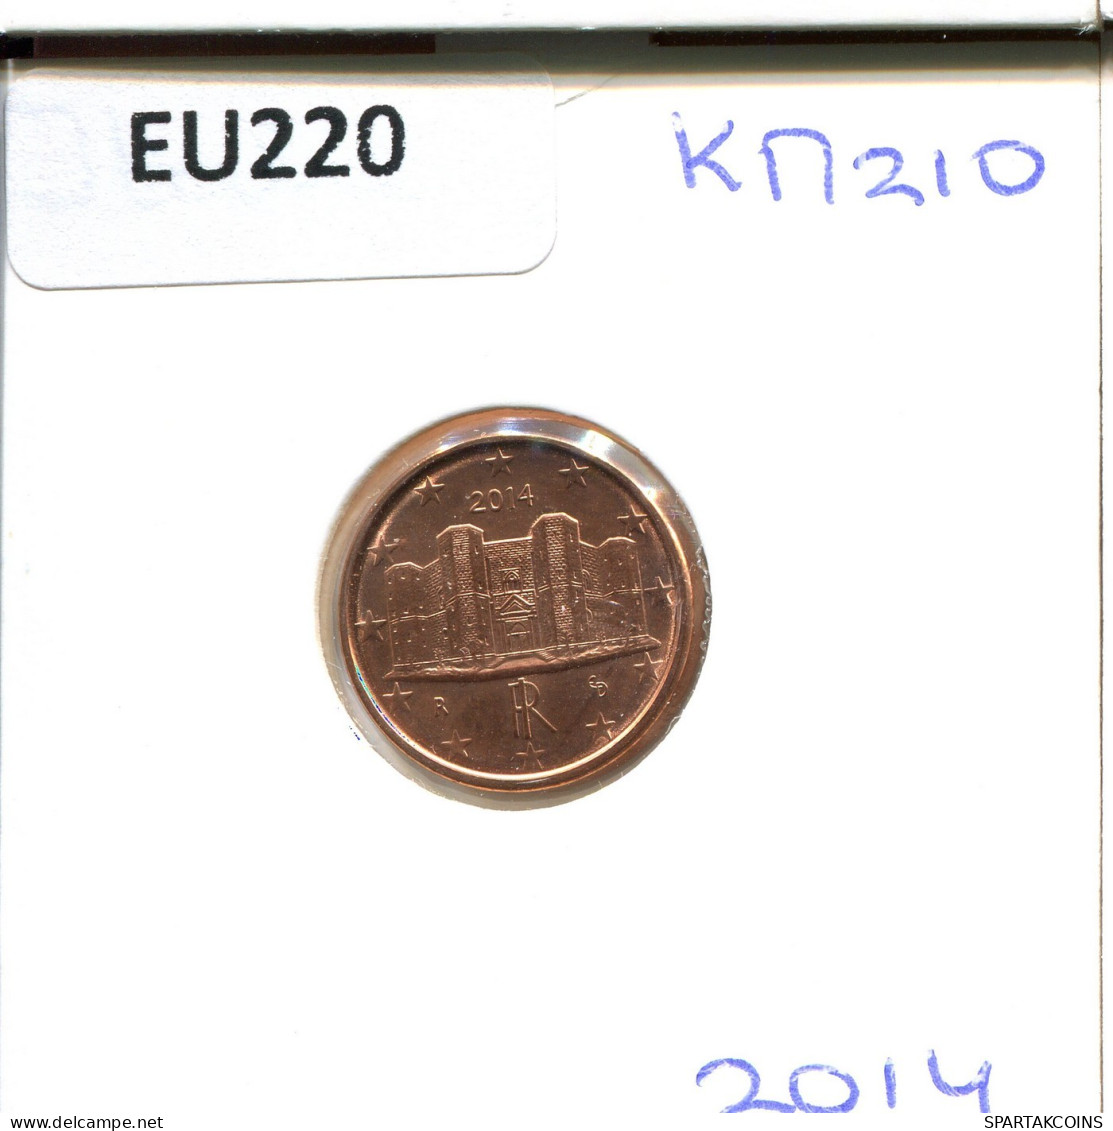 1 EURO CENT 2014 ITALY Coin #EU220.U.A - Italie